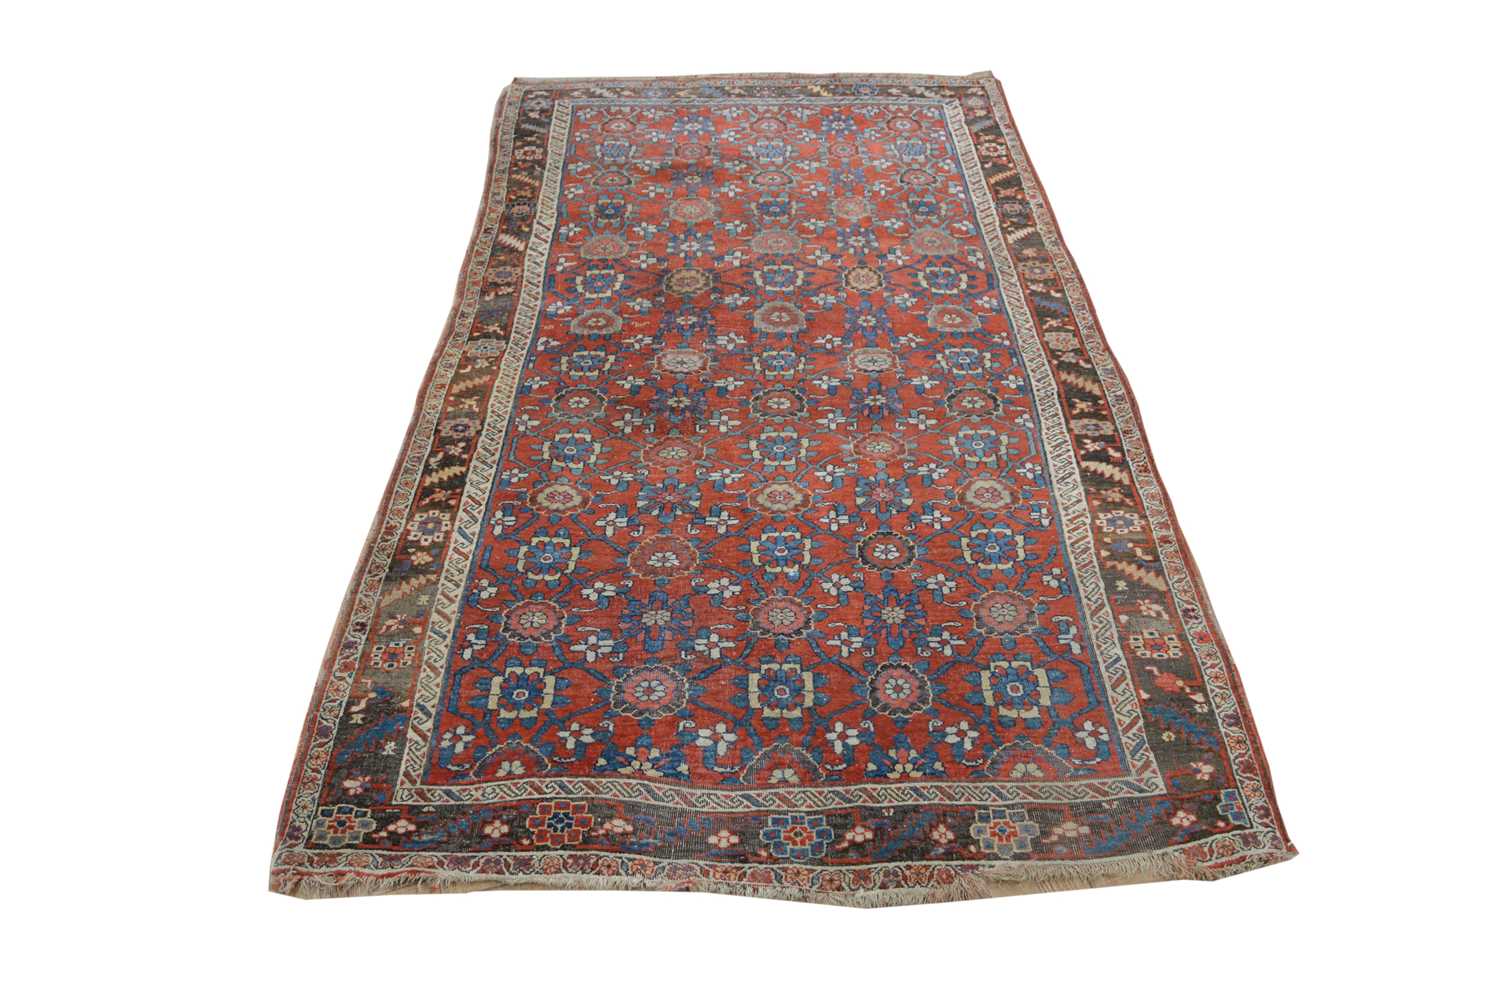 Lot 475 - Late 19th-century Persian carpet